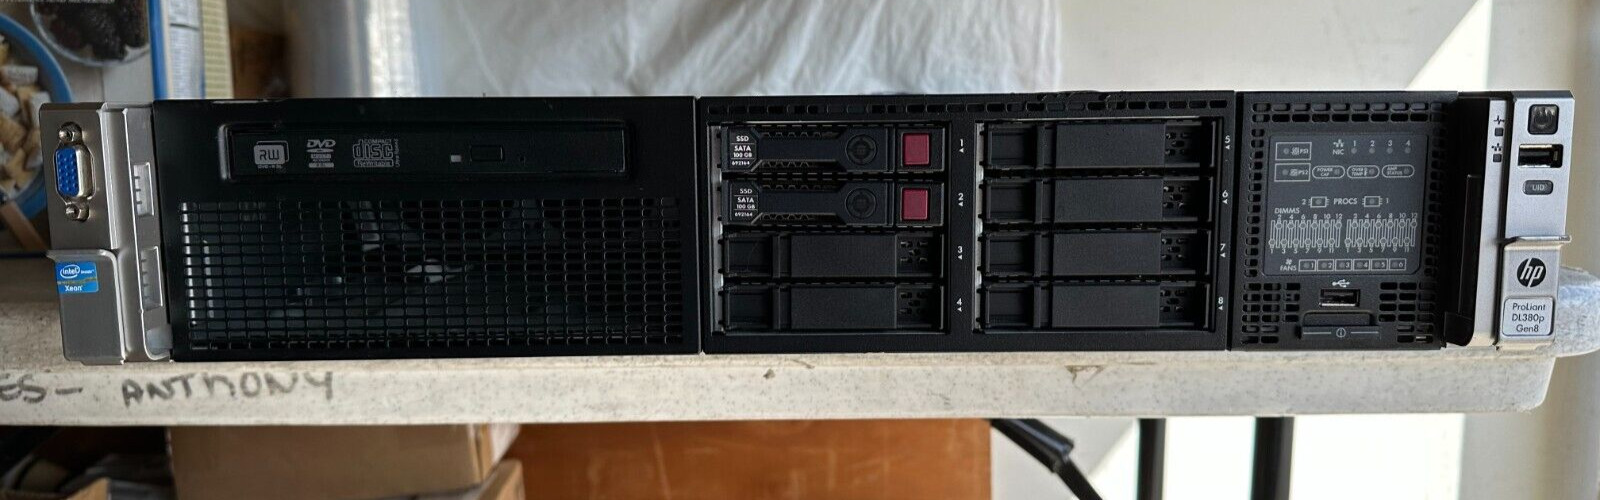 HP Proliant DL380p Generation 8 Rack Mounted Server